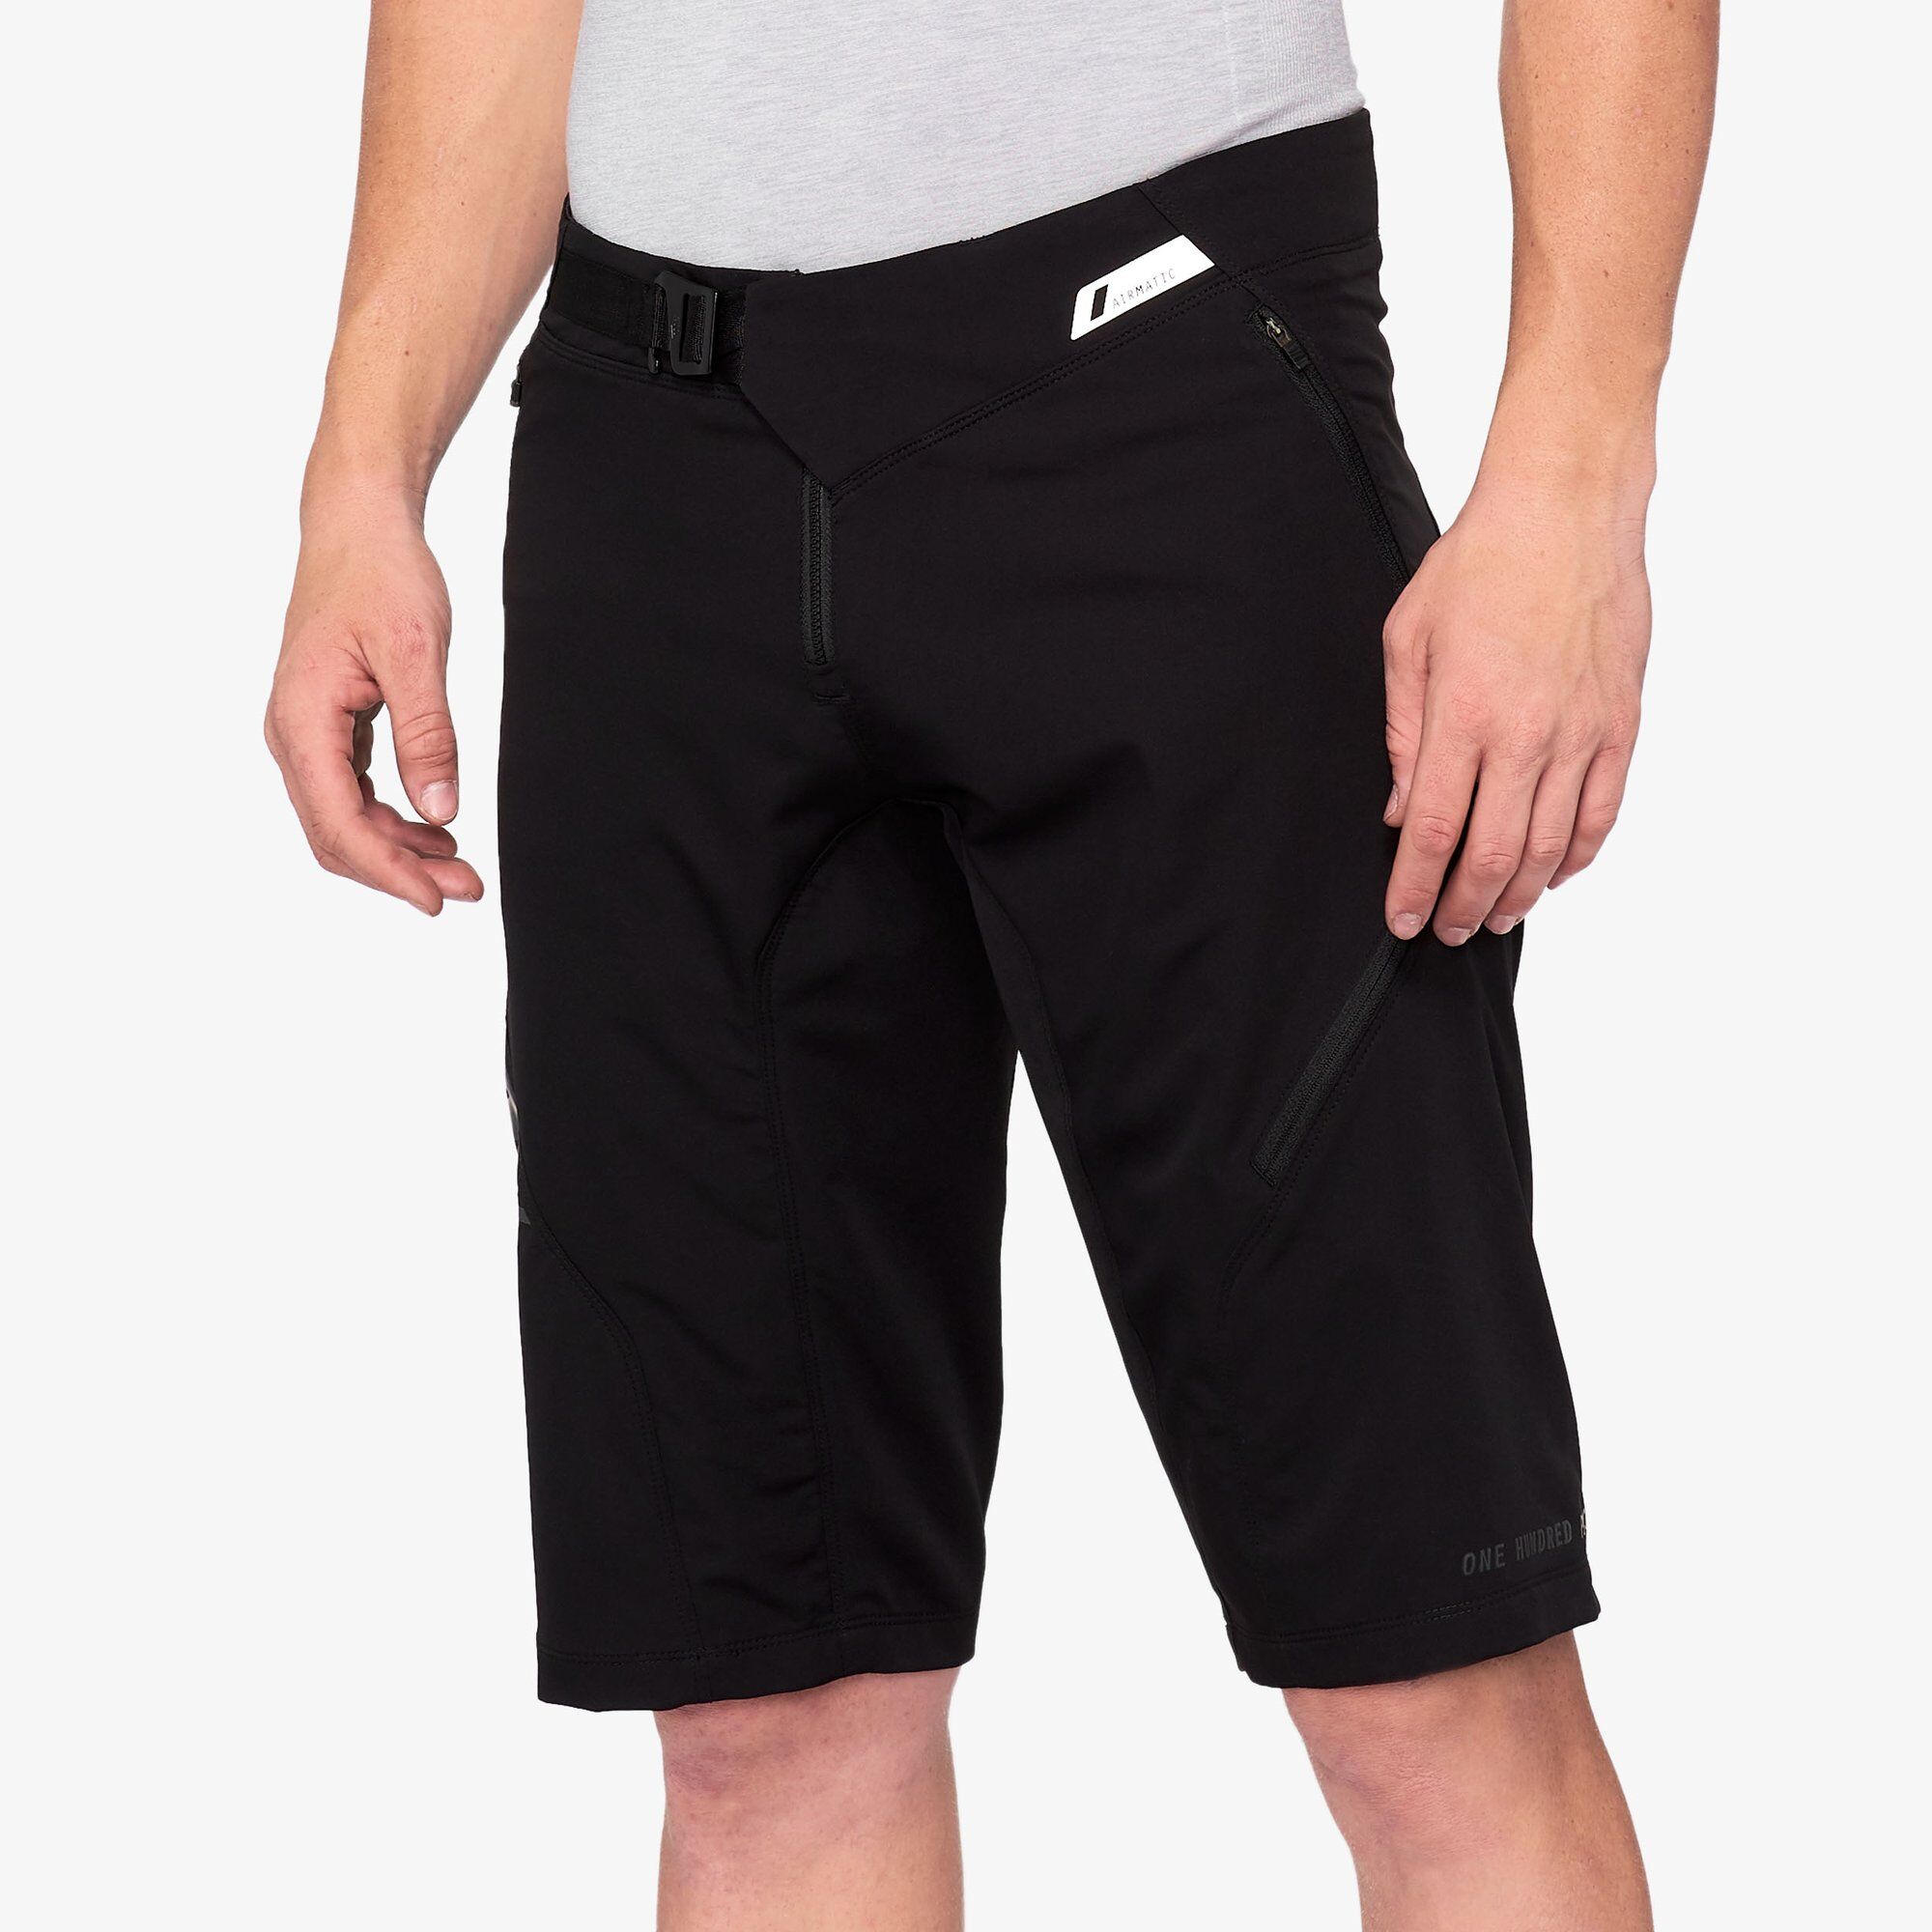 100% Airmatic - MTB shorts - Men's